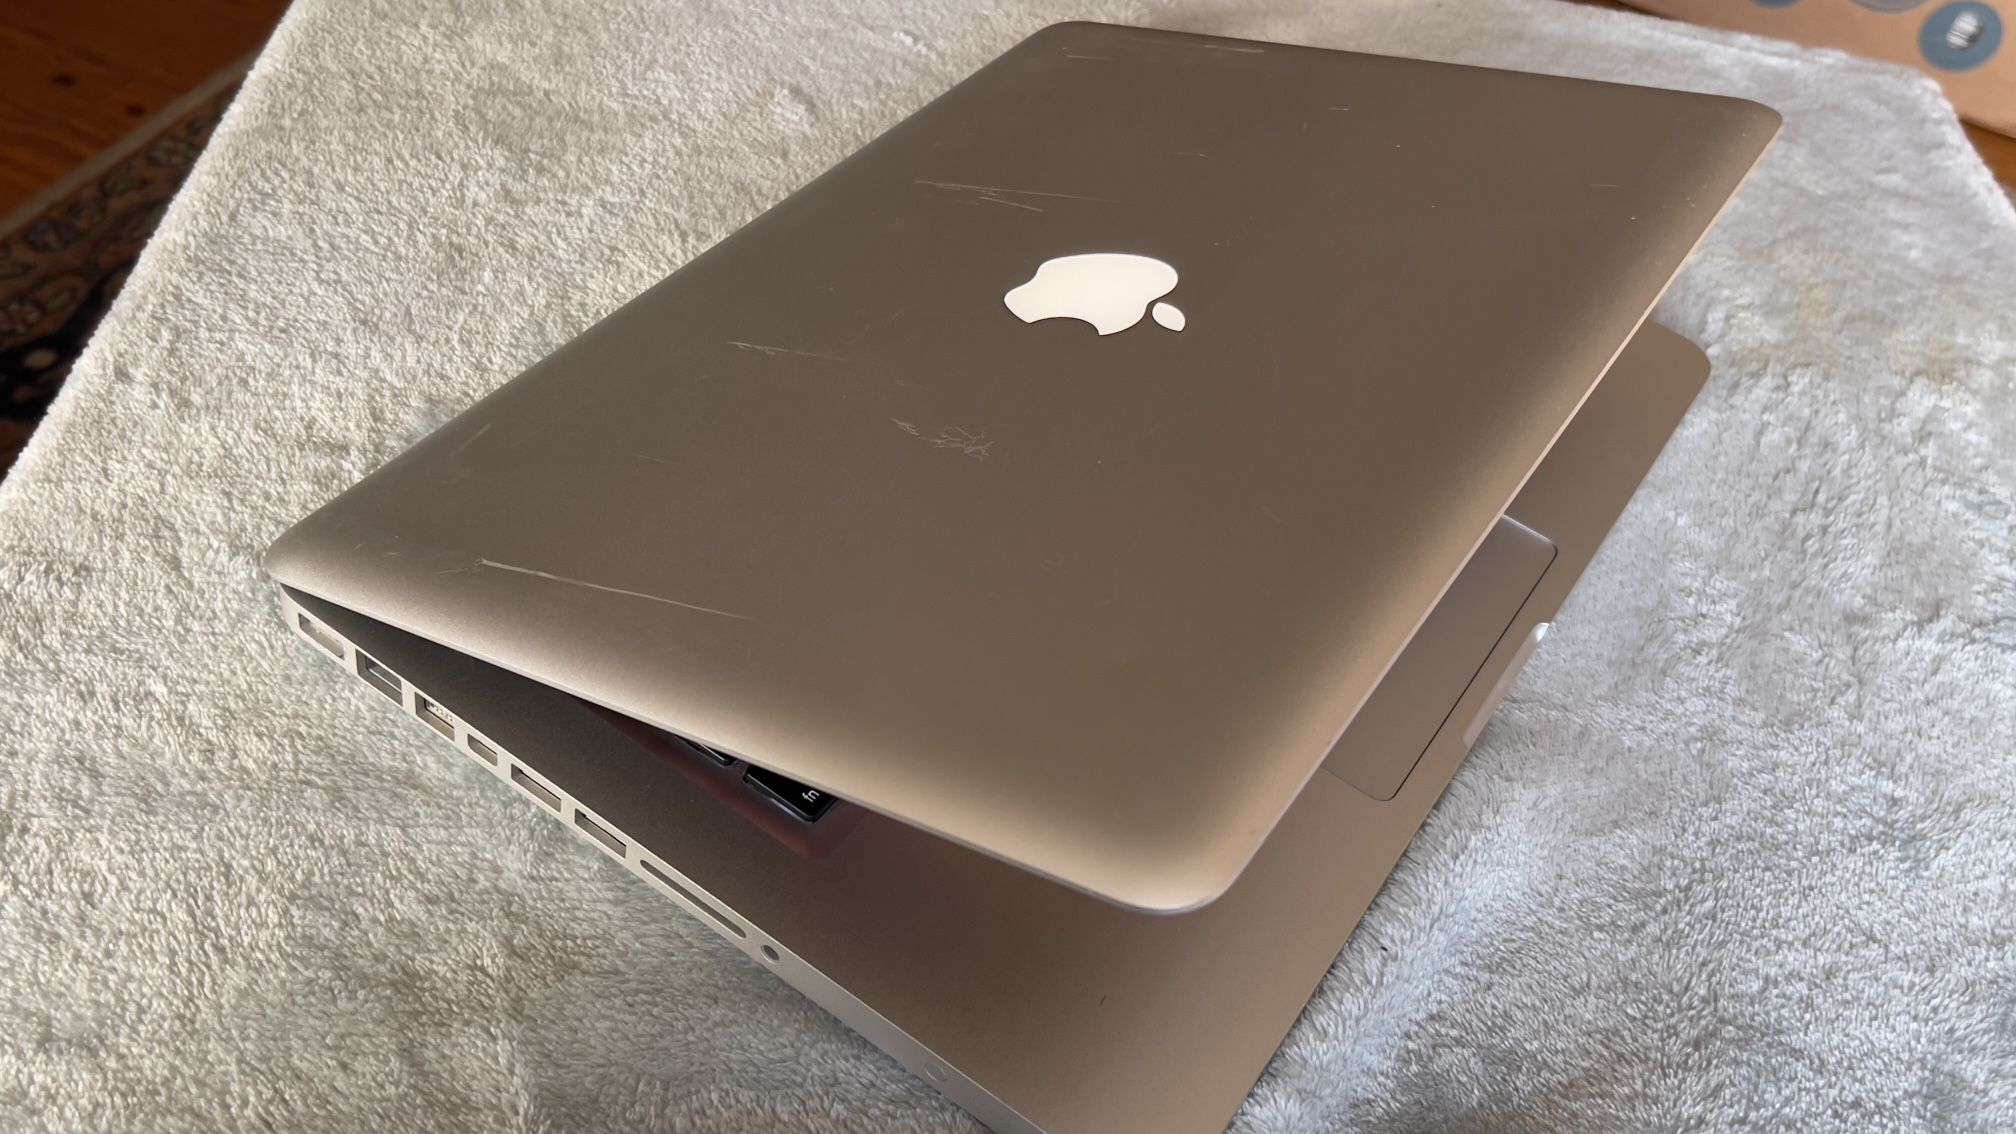 Apple MacBook Pro 13” Core I5 4GB Ram 500GB STORAGE $150